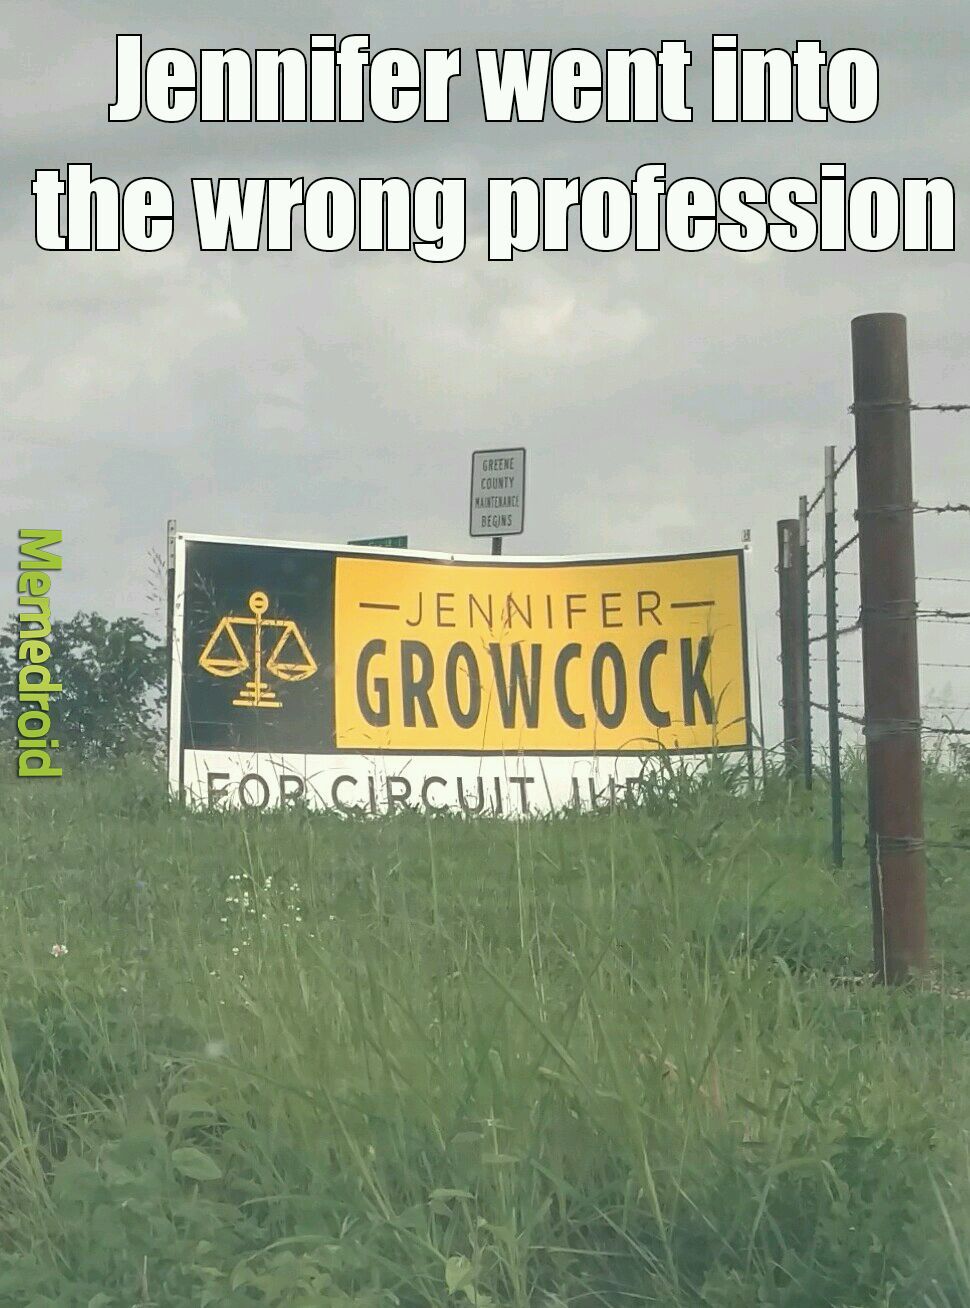 Ha. Growcock. - meme